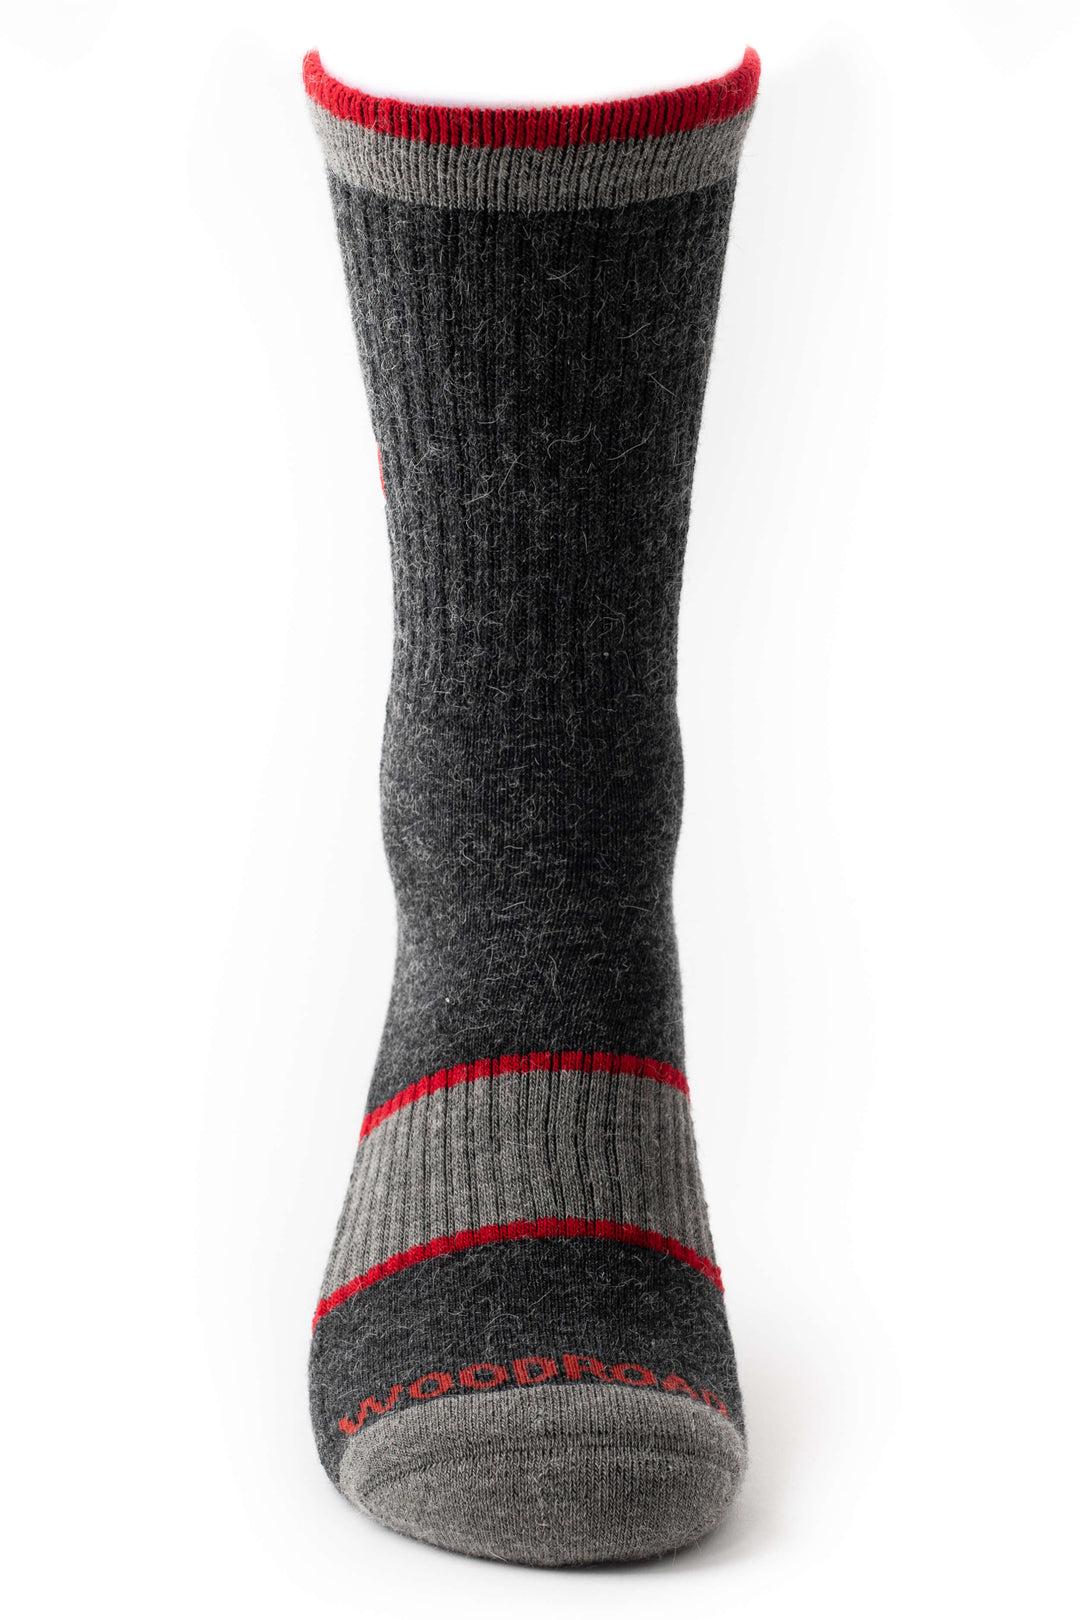 Nada Llama Crew Socks - Alpaca Socks Bottom - Tall - Woodroad Gear Co.